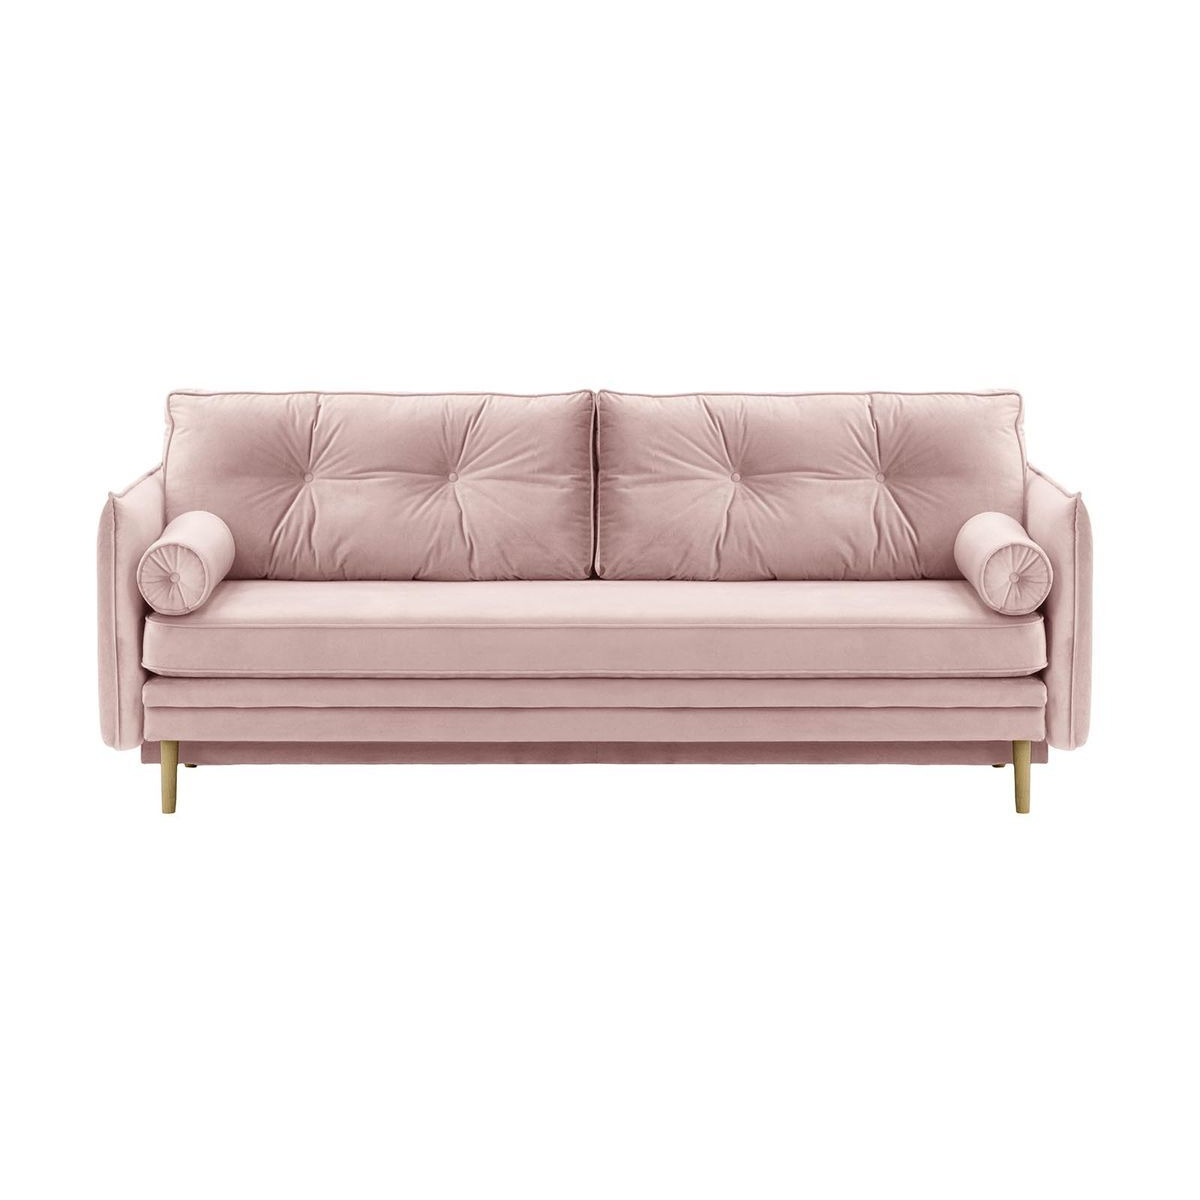 Darnet Sofa Bed with Storage, lilac, Leg colour: wax black - image 1